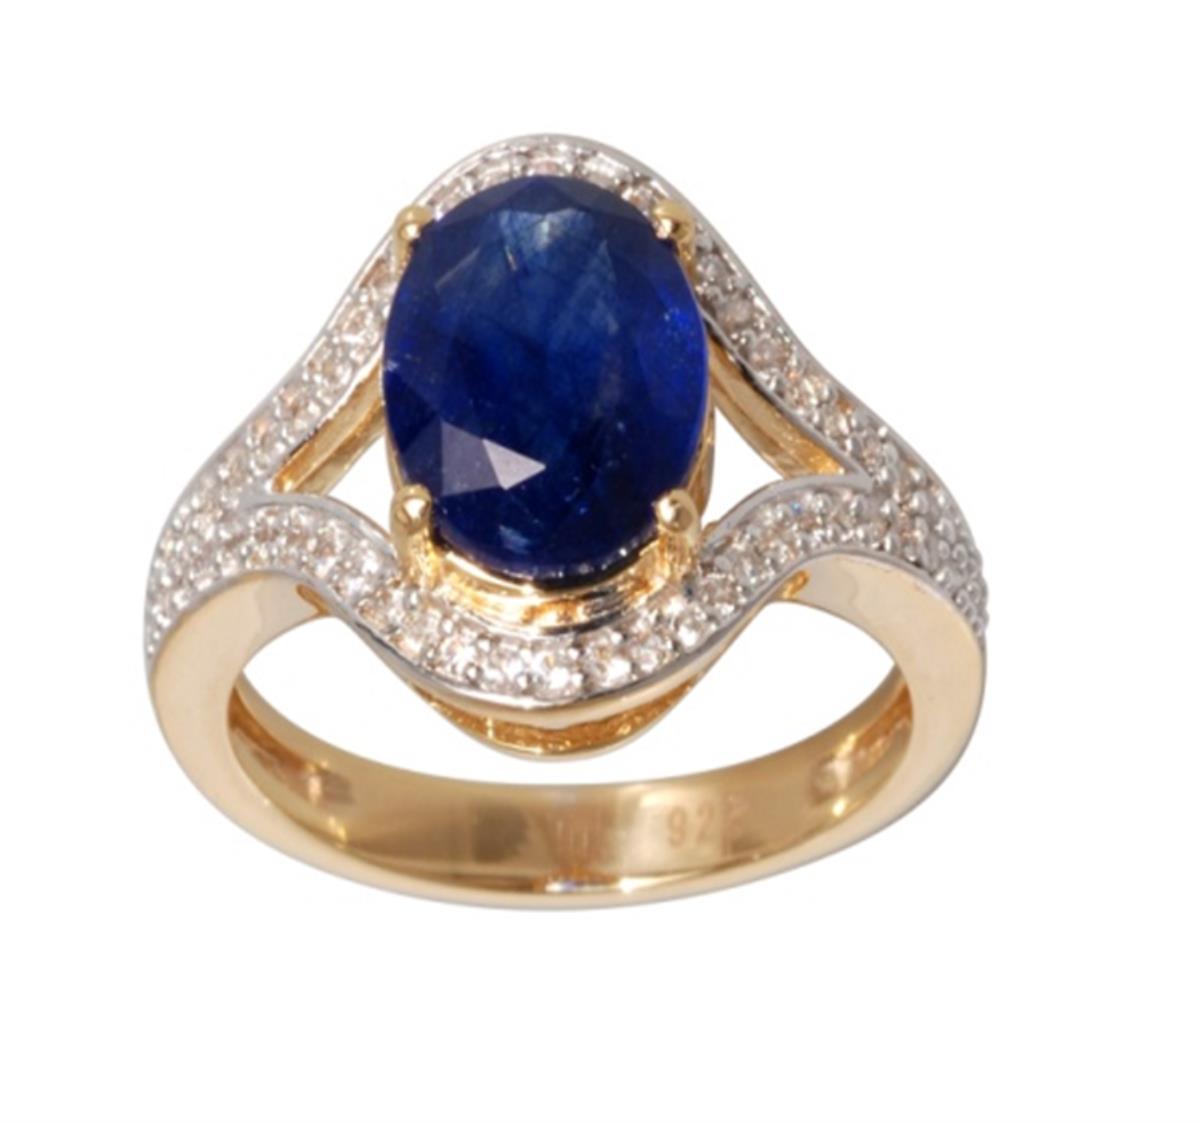 10K Yellow Gold 10x8mm Oval Cut Glass Filled Sapphire & White Zircon Split Shank Fashion Ring